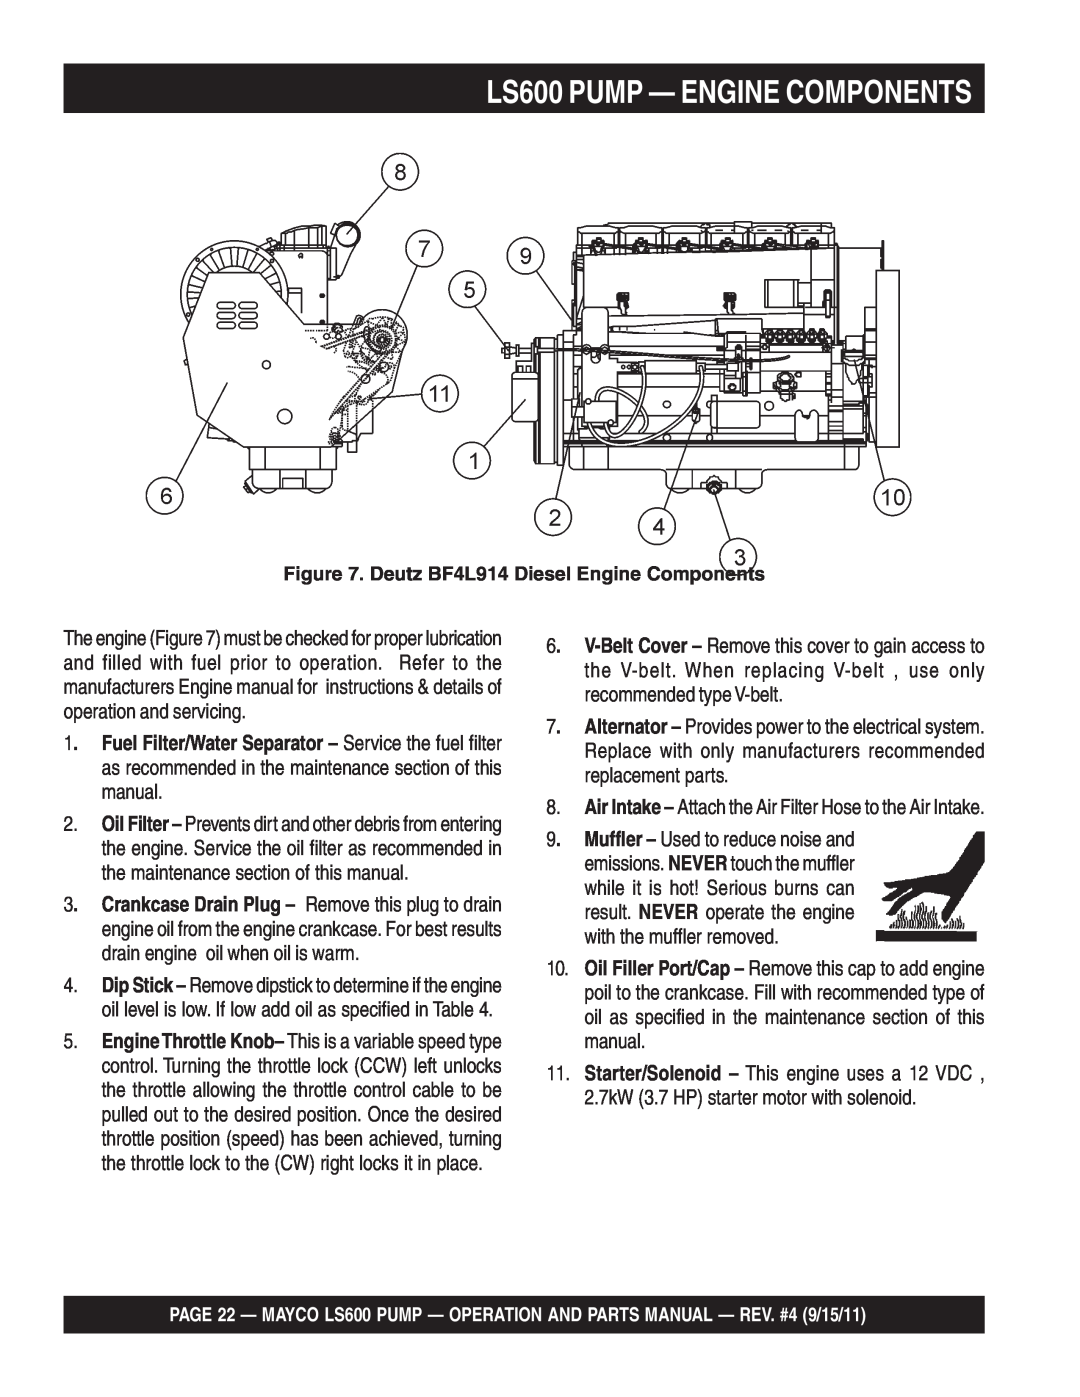 Multiquip manual LS600 PUMP — ENGINE COMPONENTS, Deutz BF4L914 Diesel Engine Components 